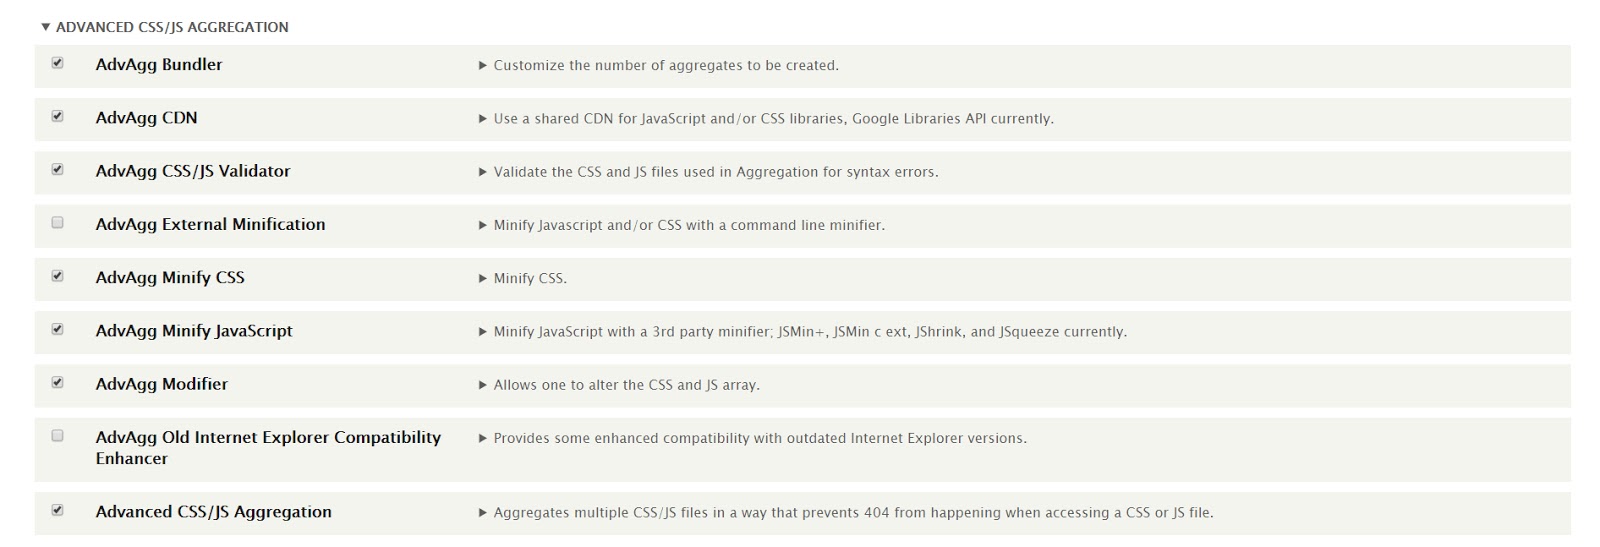 Como otimizar Drupal para o Google Pagespeed?